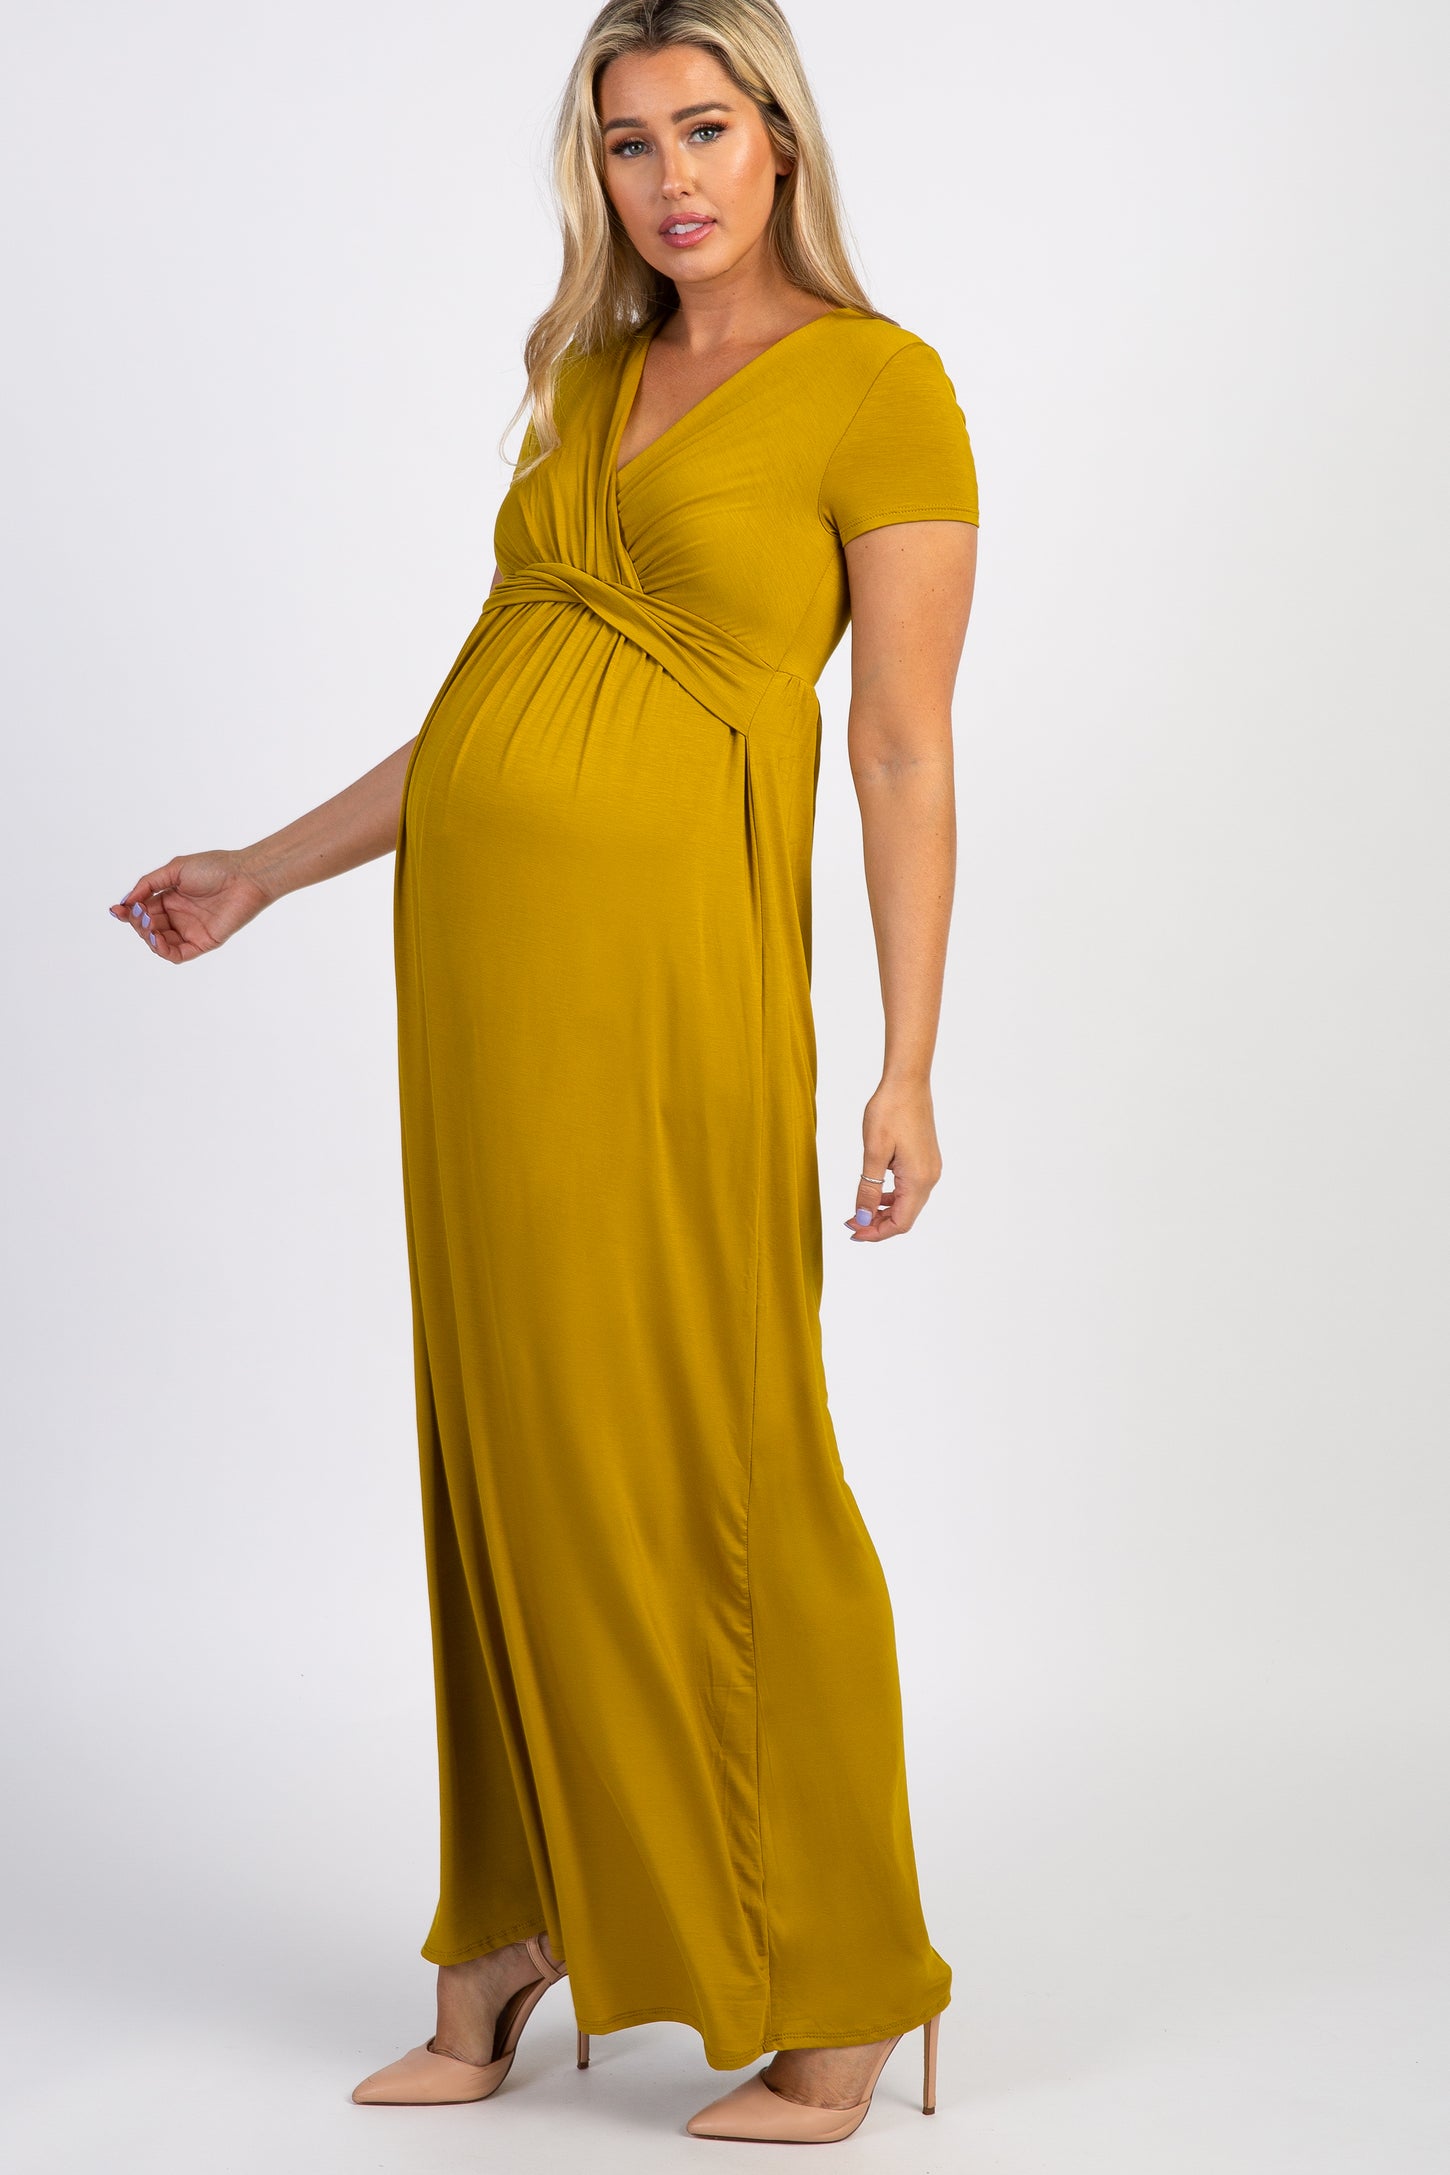 Mustard Draped Maternity/Nursing Maxi Dress